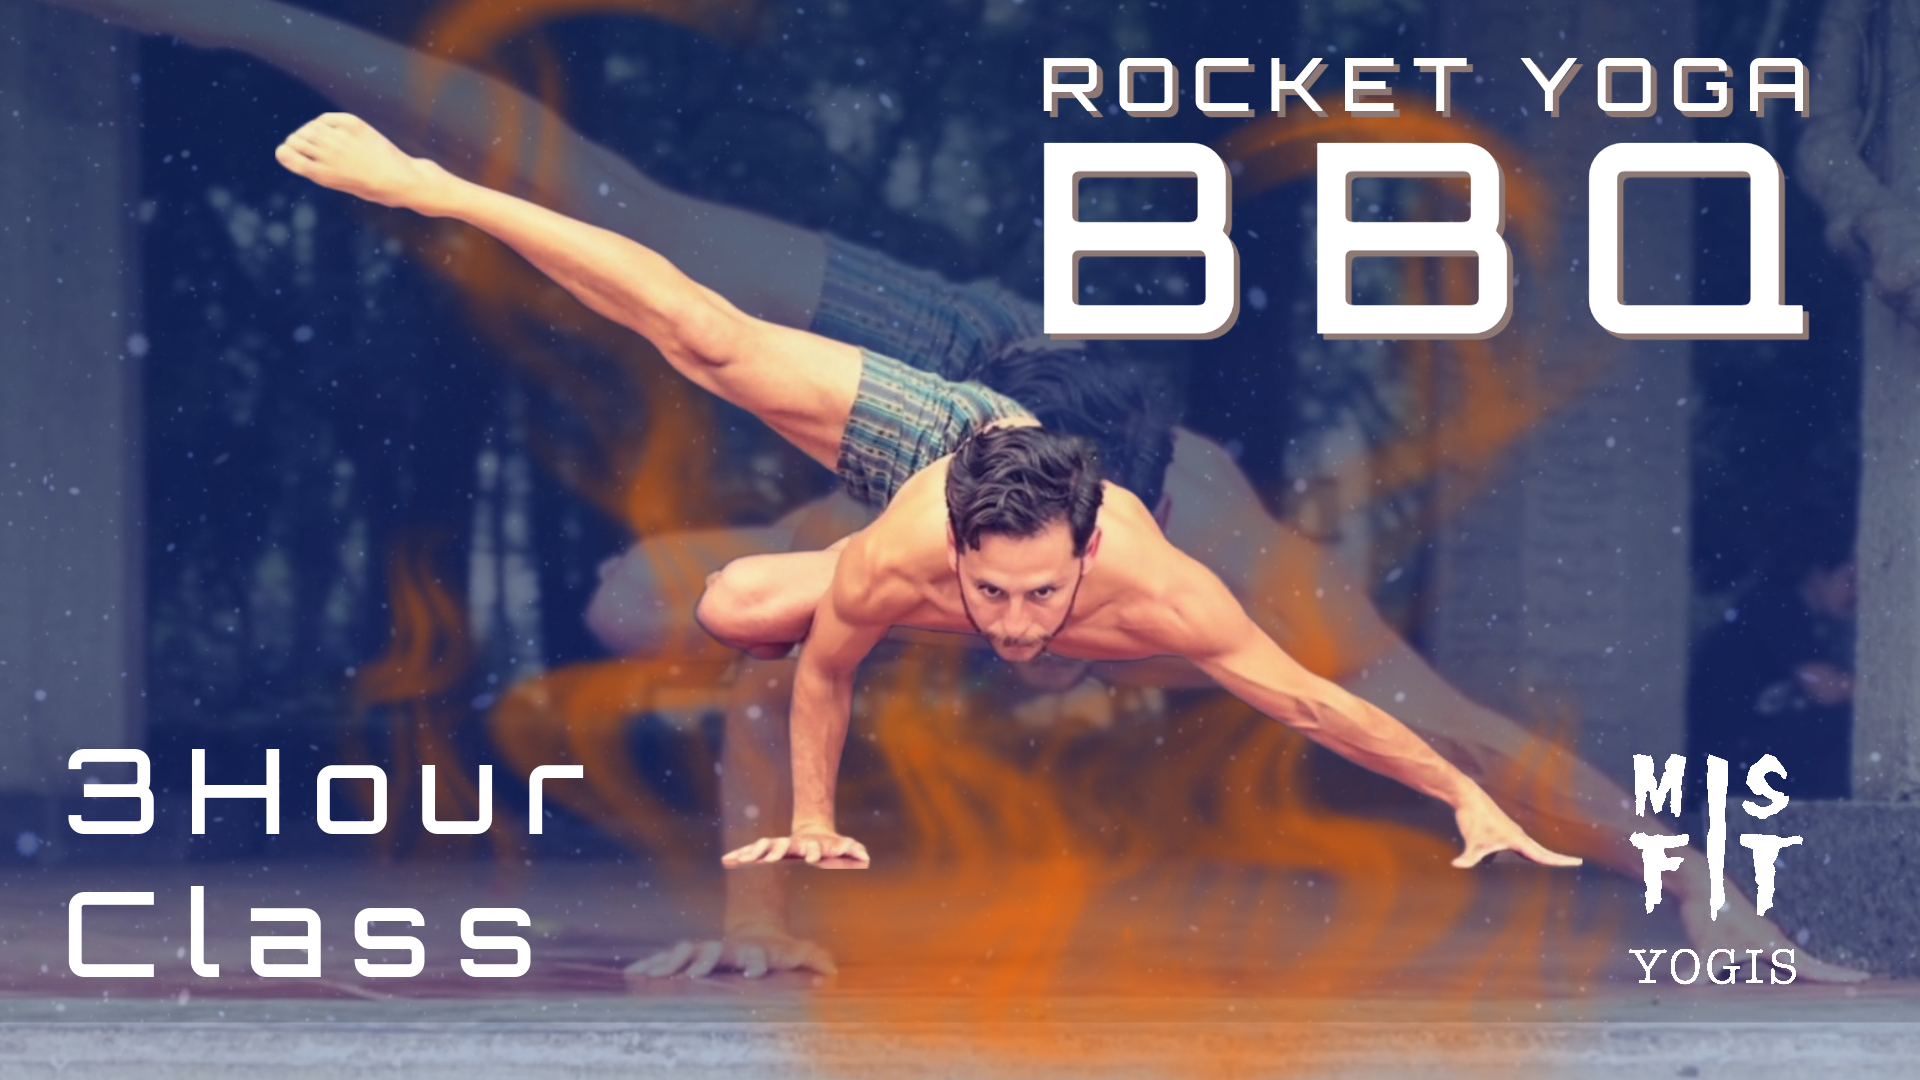 Rocket Yoga BBQ